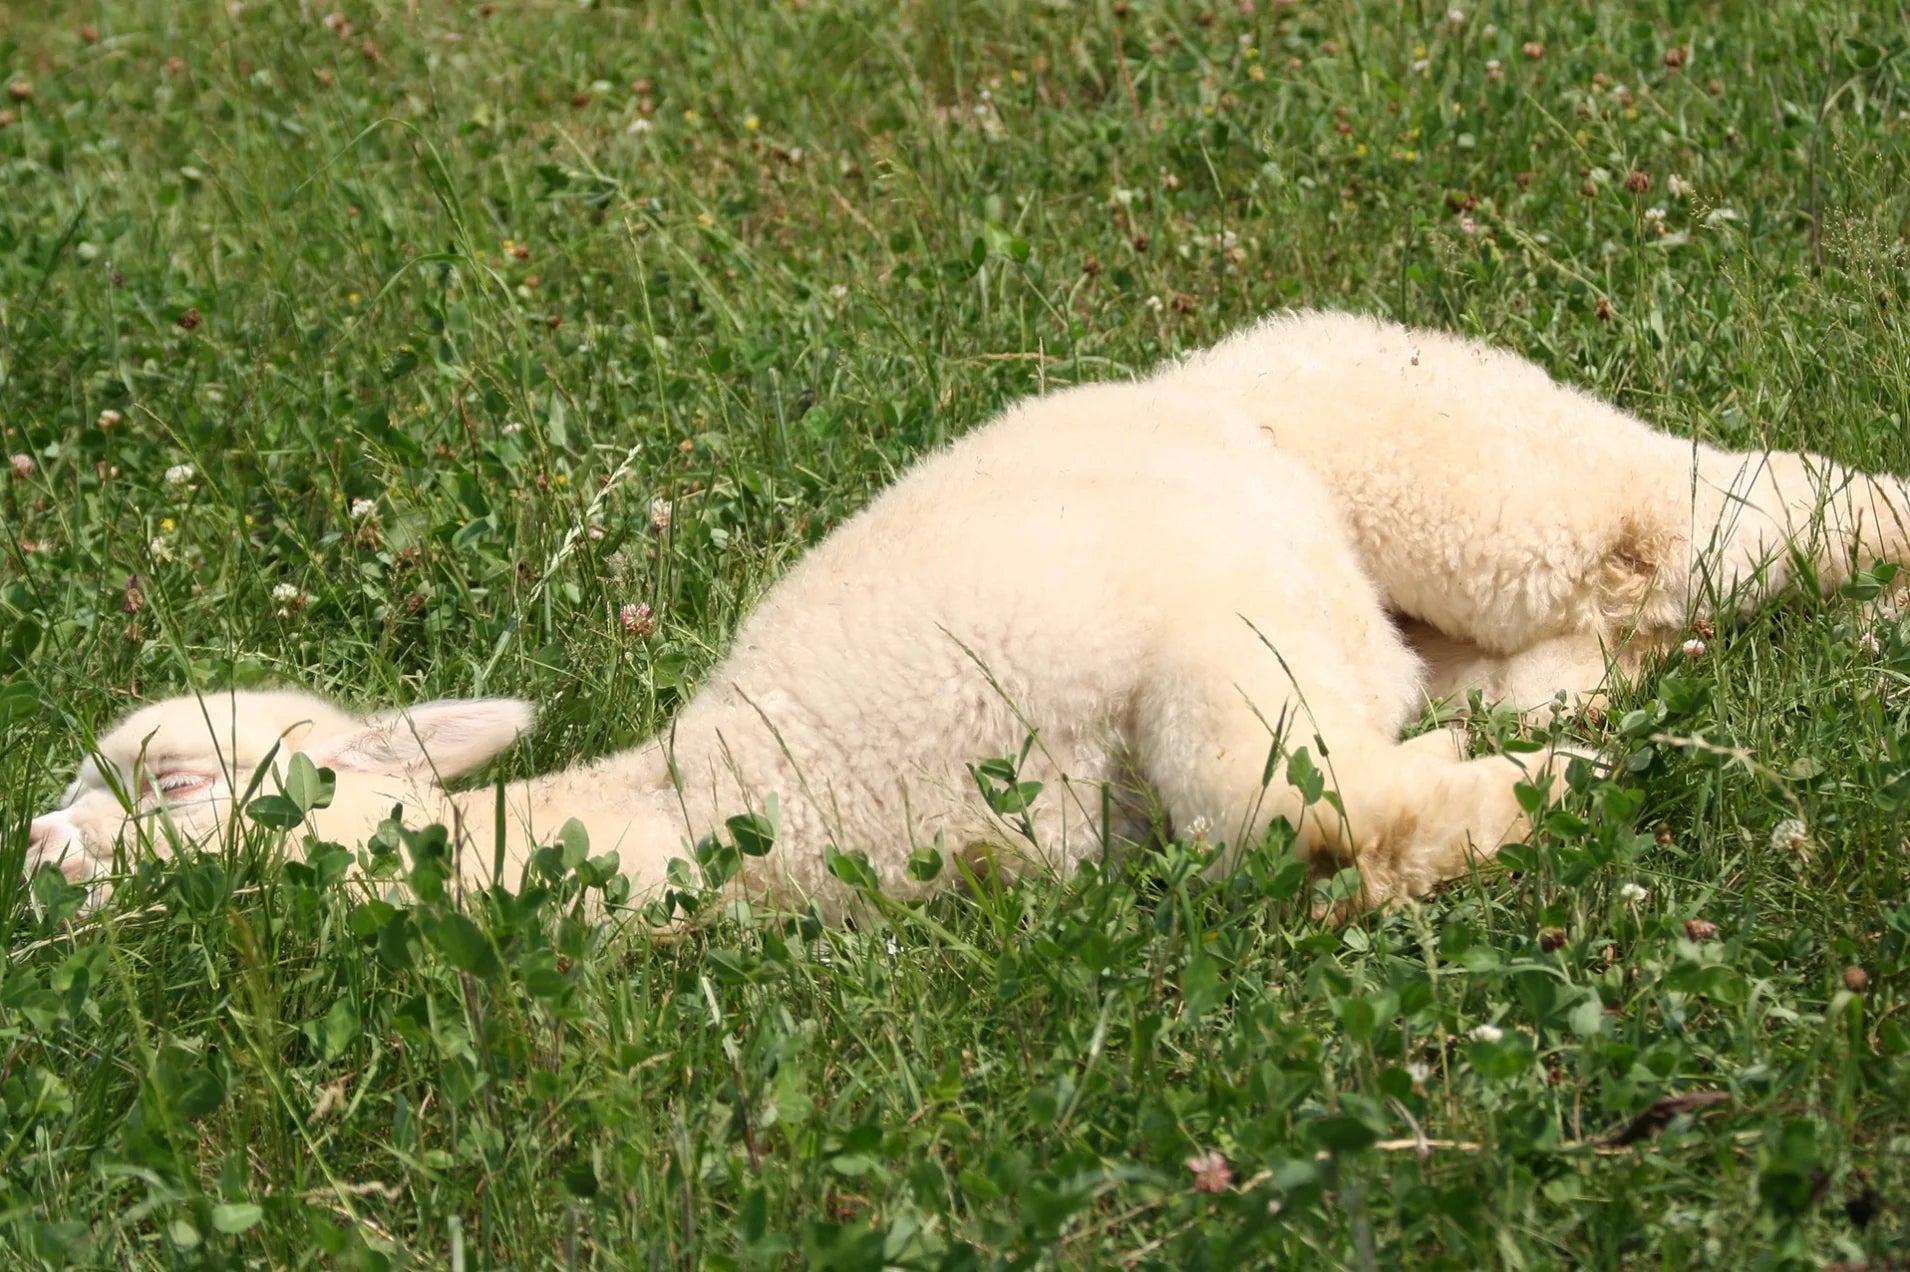 An alpaca sleeps in the grass